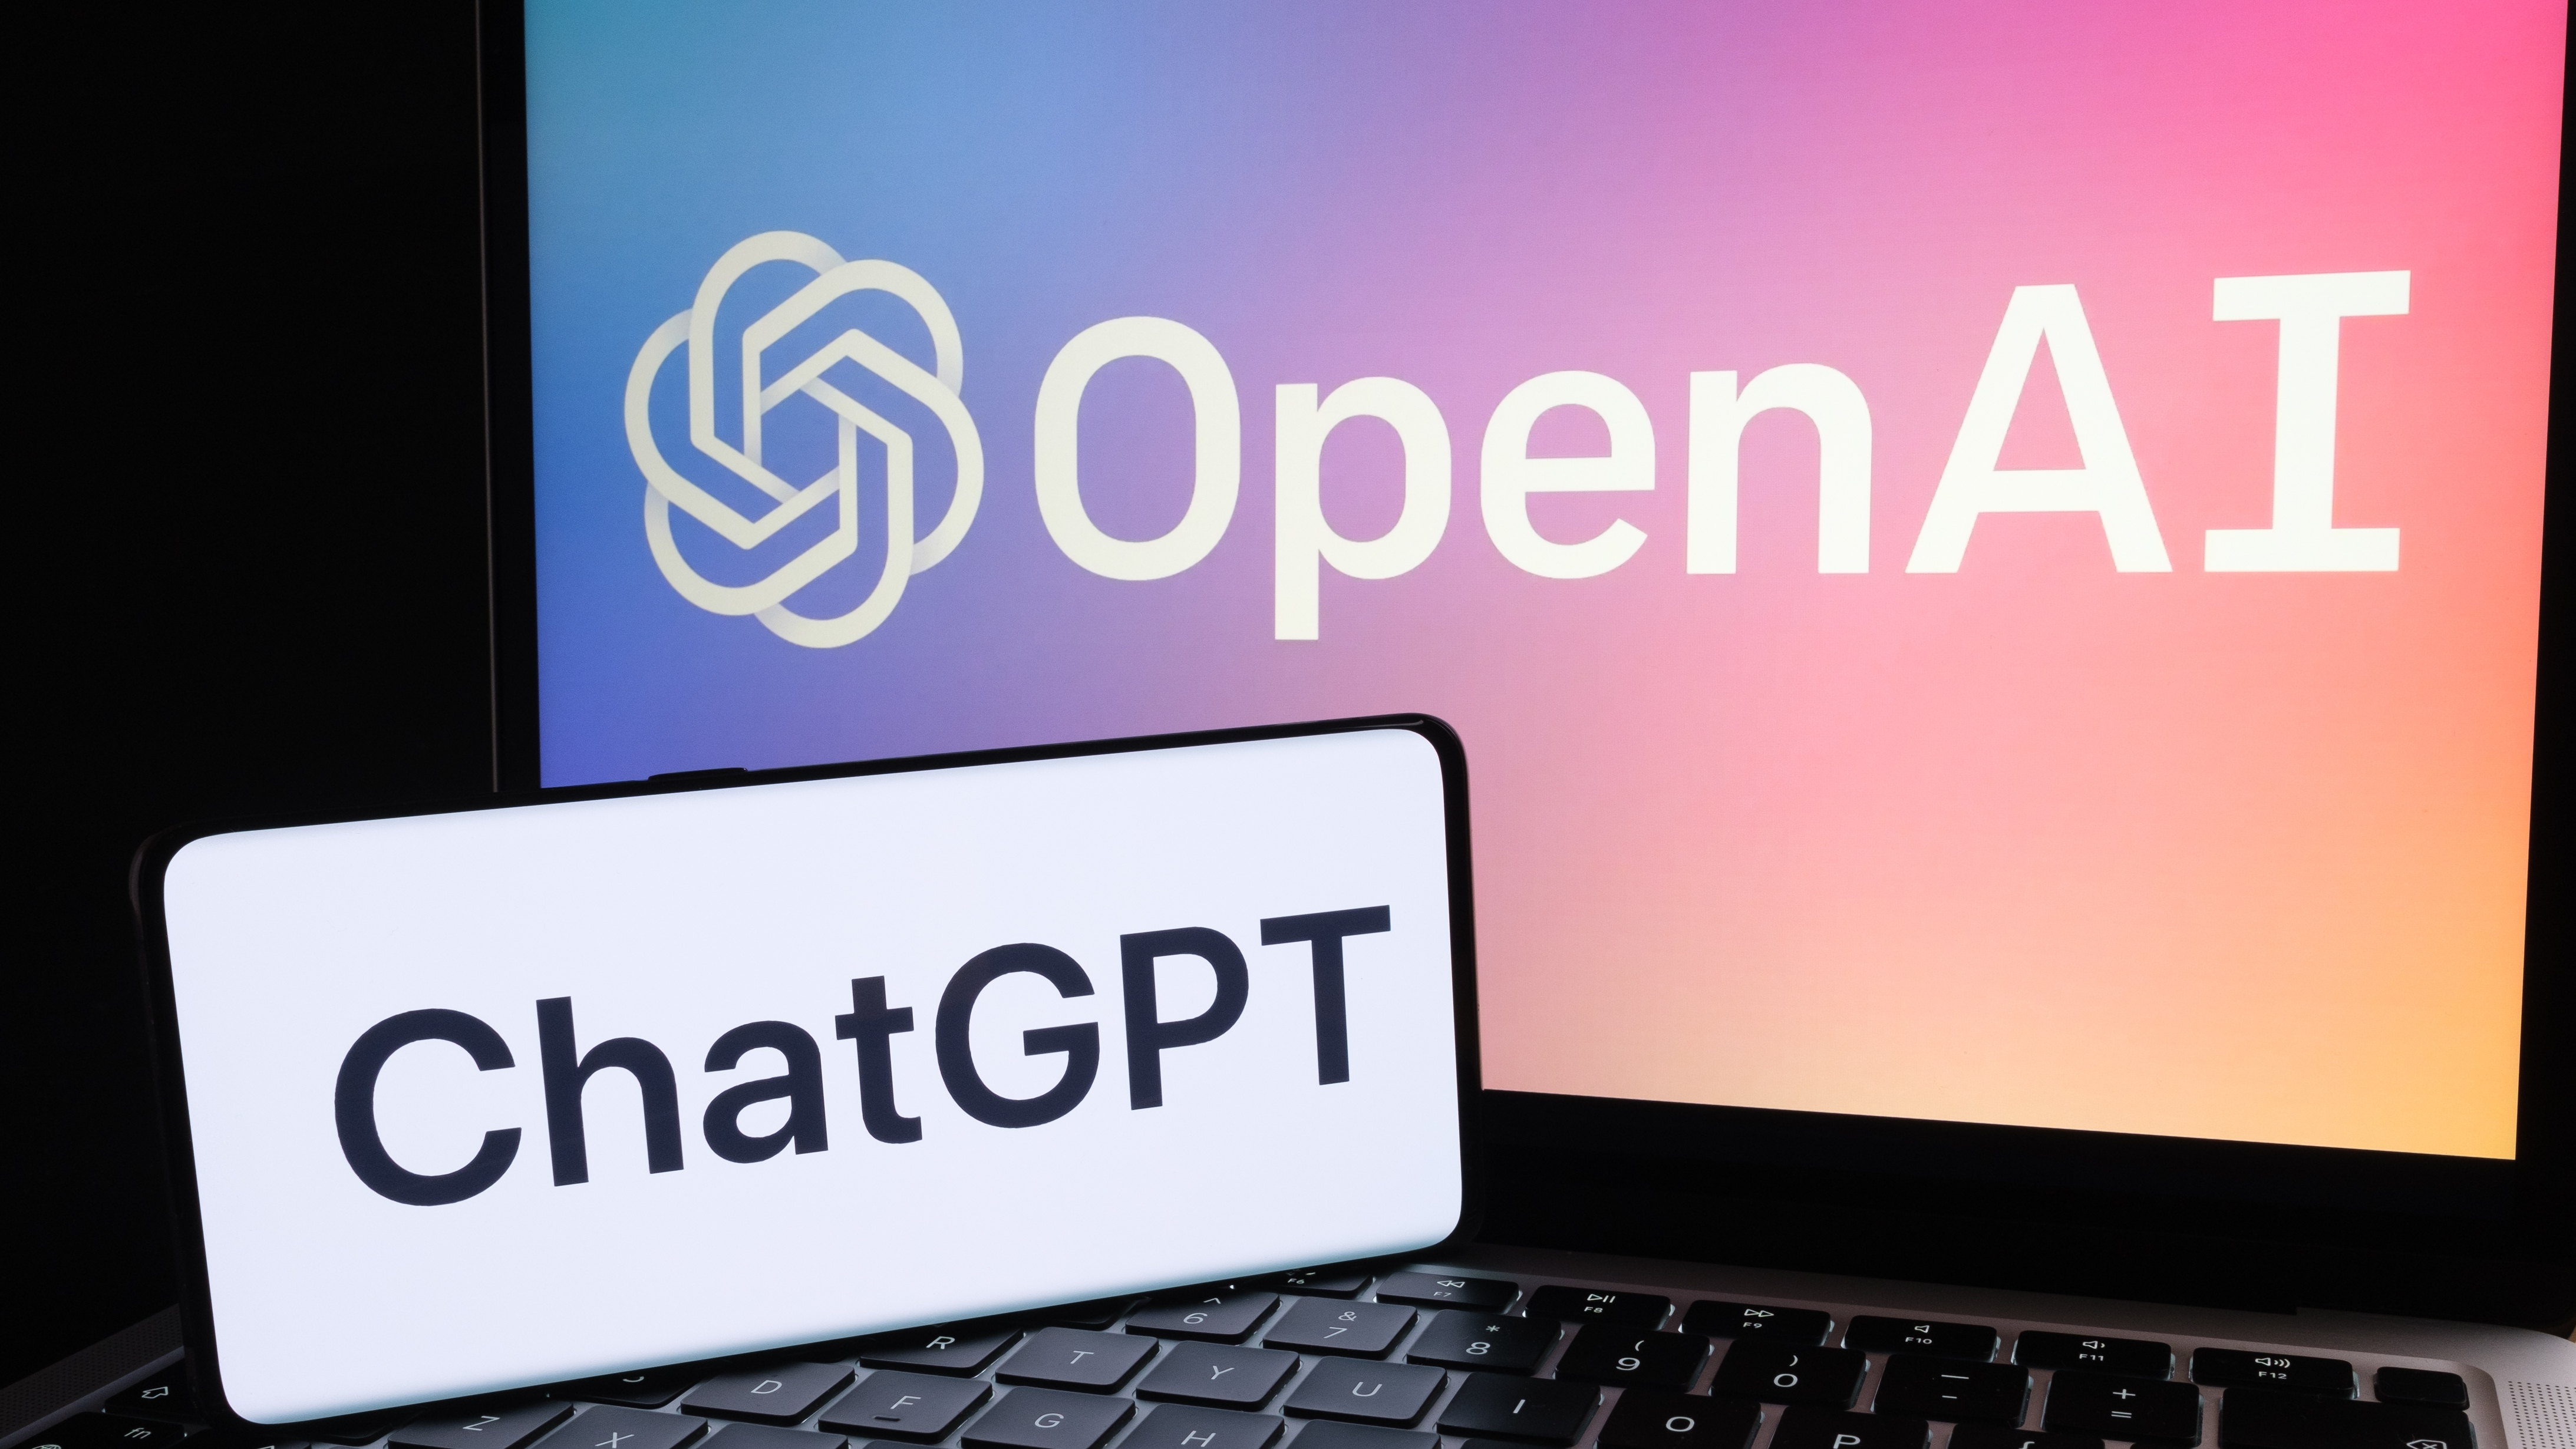 Ponsel berlogo ChatGPT dan laptop berlogo OpenAI